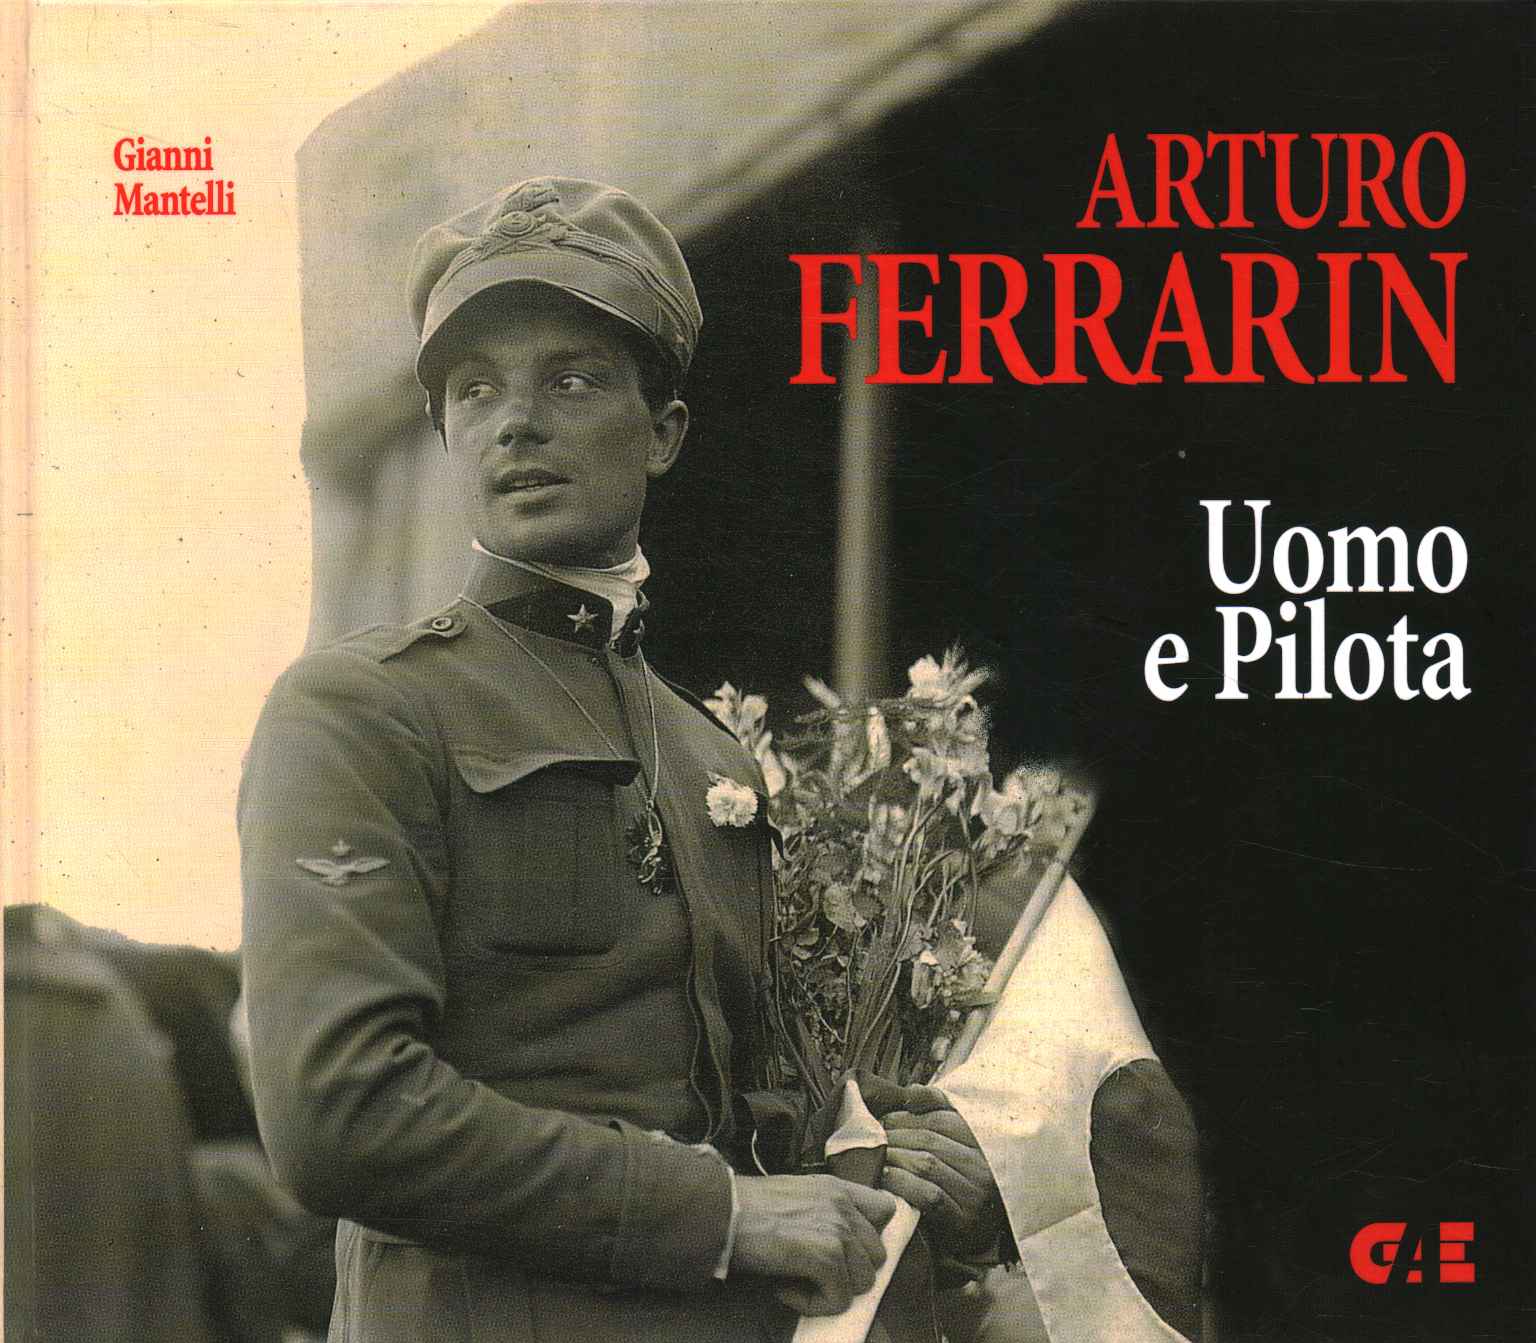 Arturo Ferrarin, Arturo Ferrarin. Man and pilot